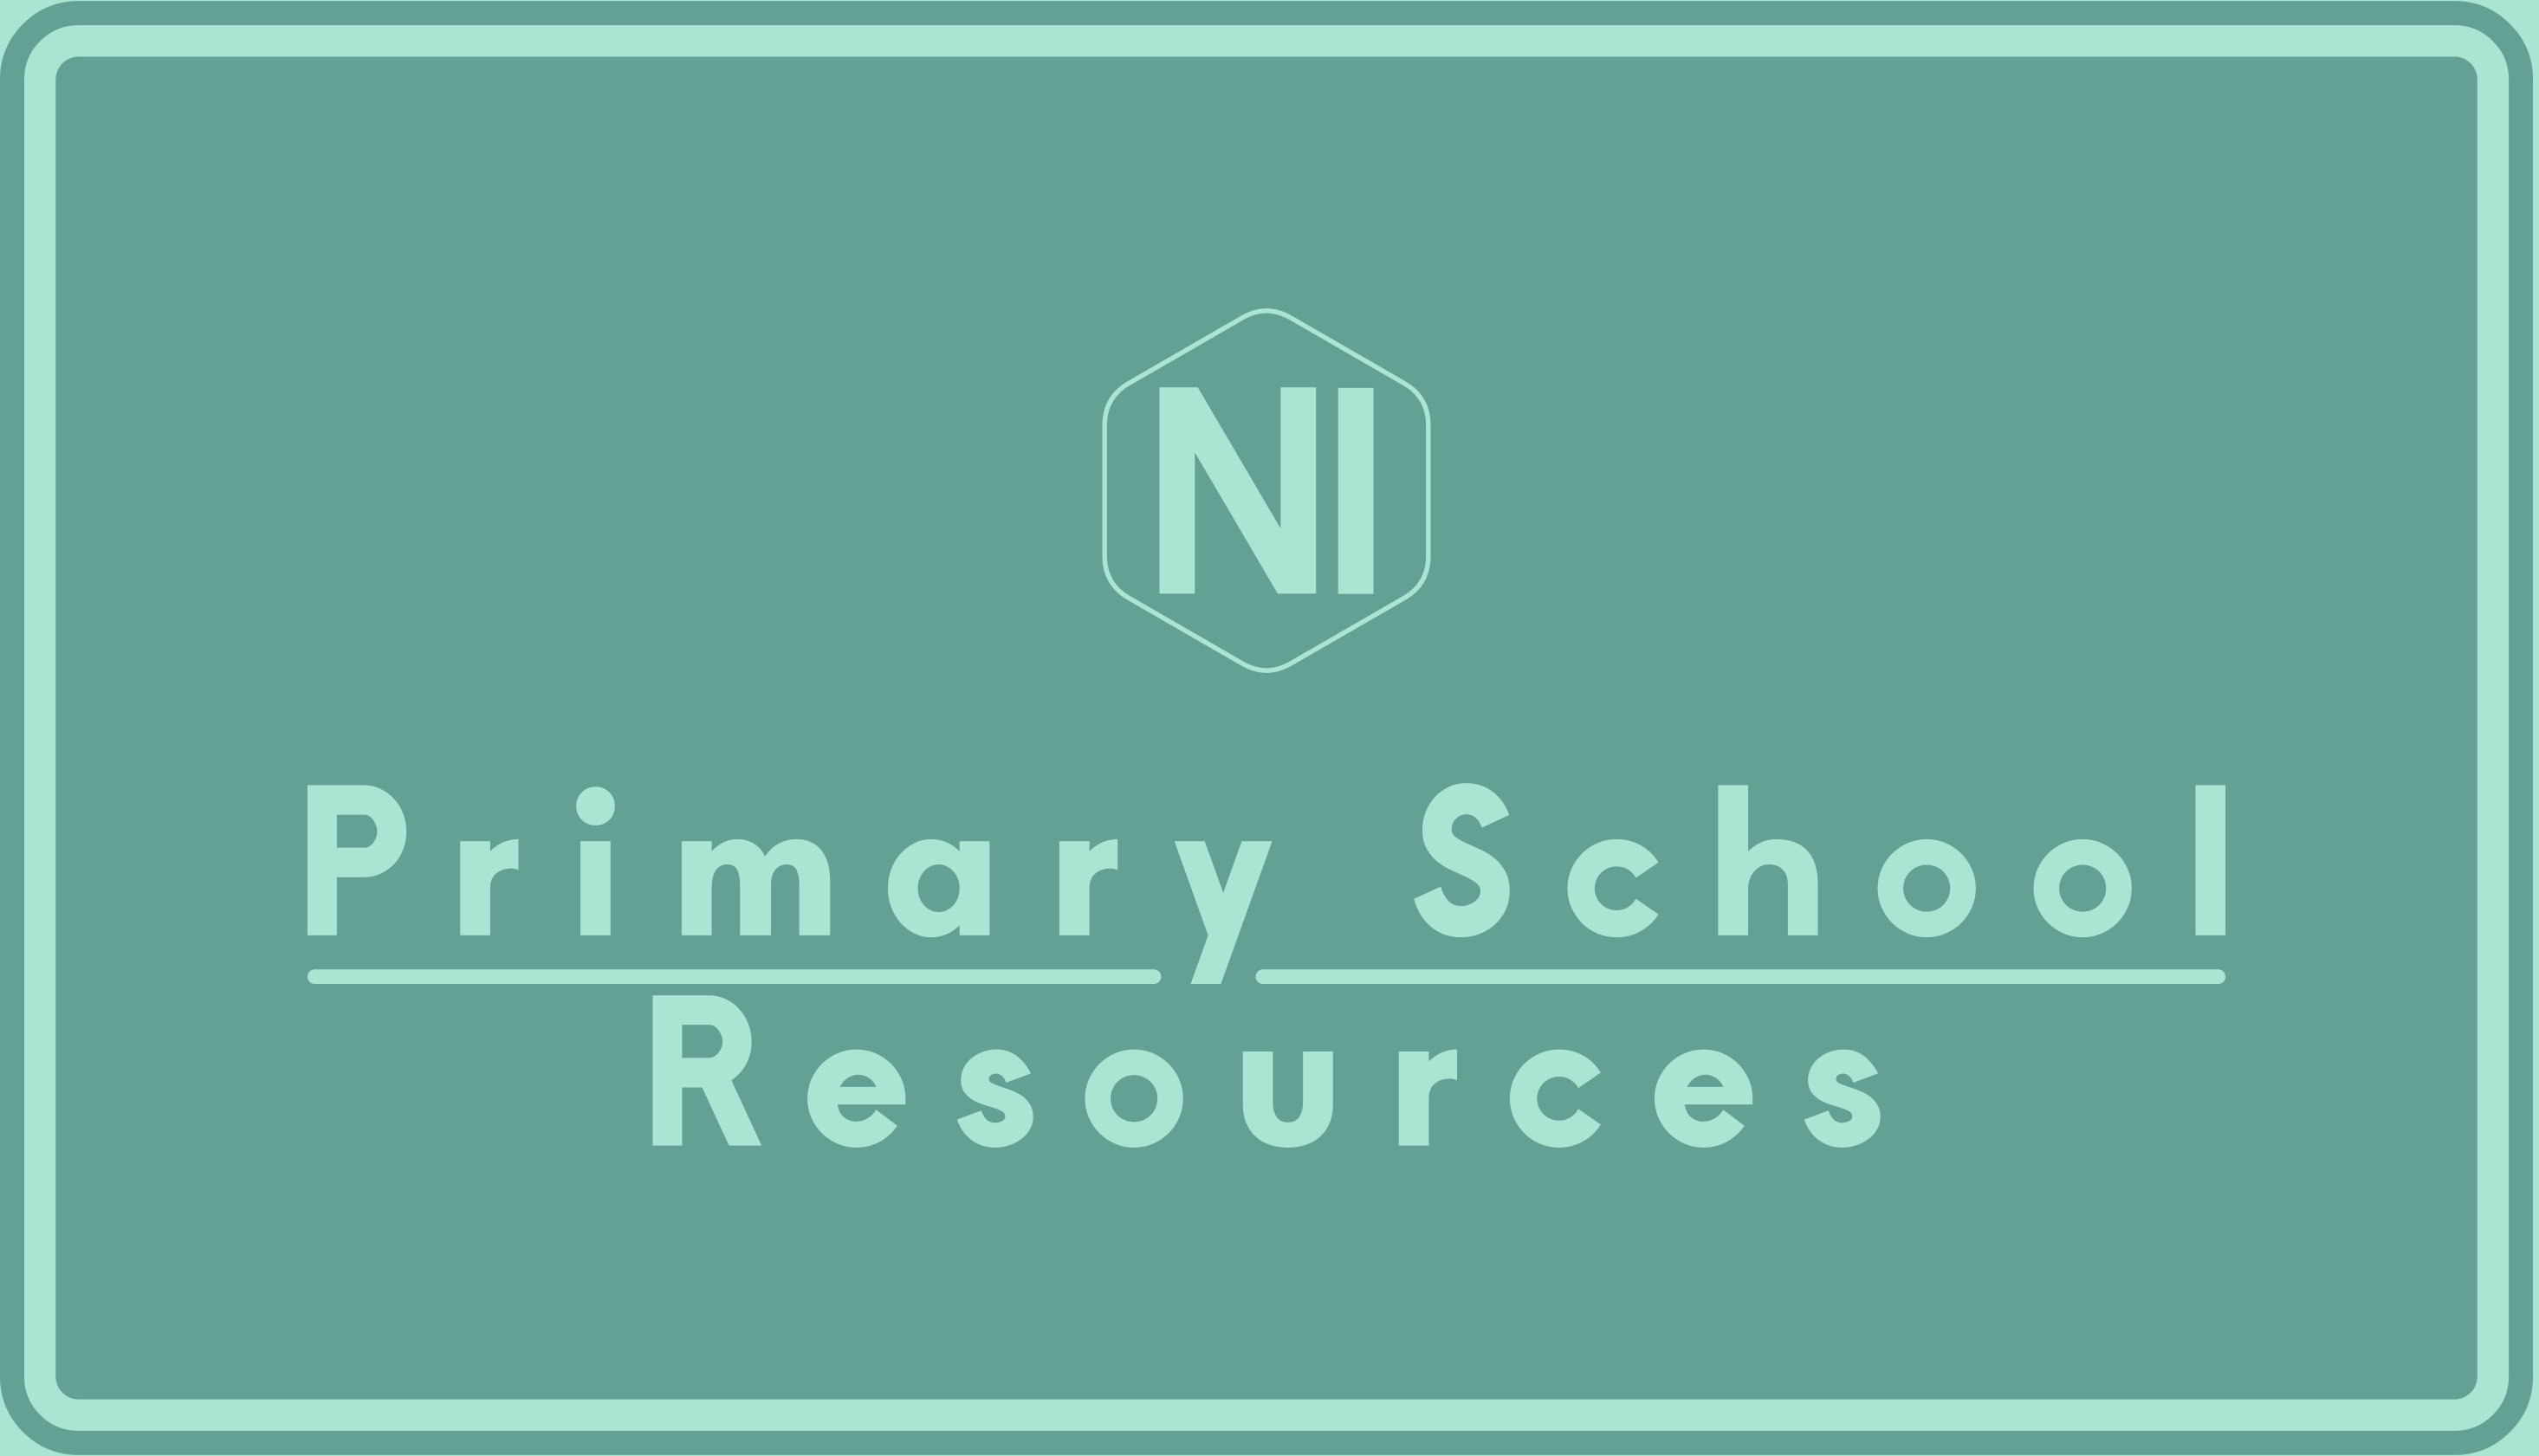 NI Primary School Resources